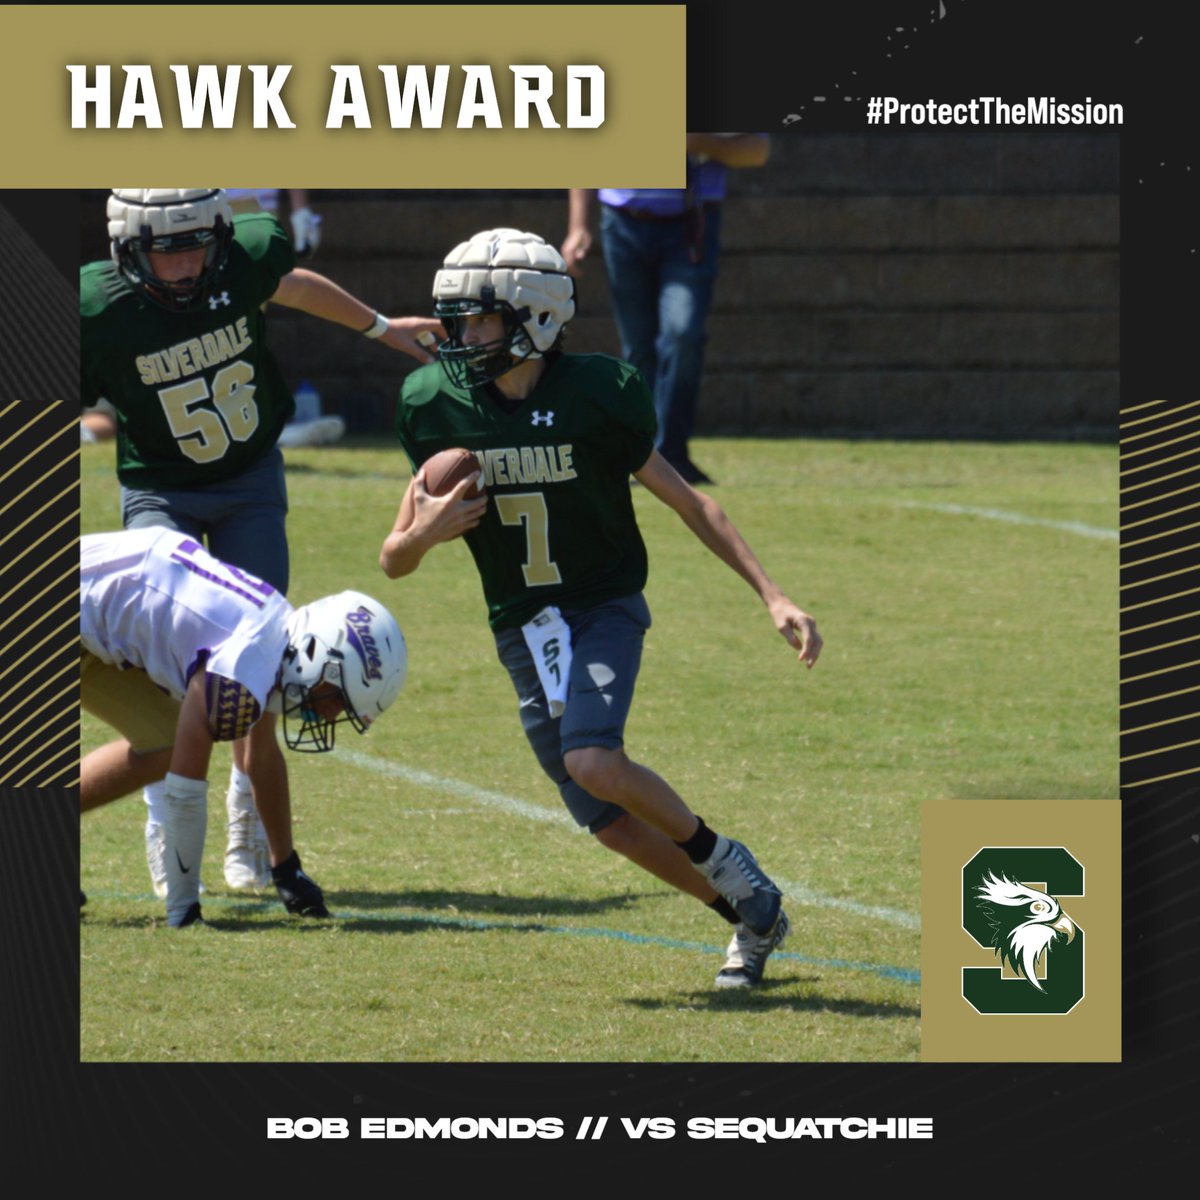 Hawk Award vs. Sequatchie #SBAFootball2pt3 #Built2BDifferent #ProtectTheMission